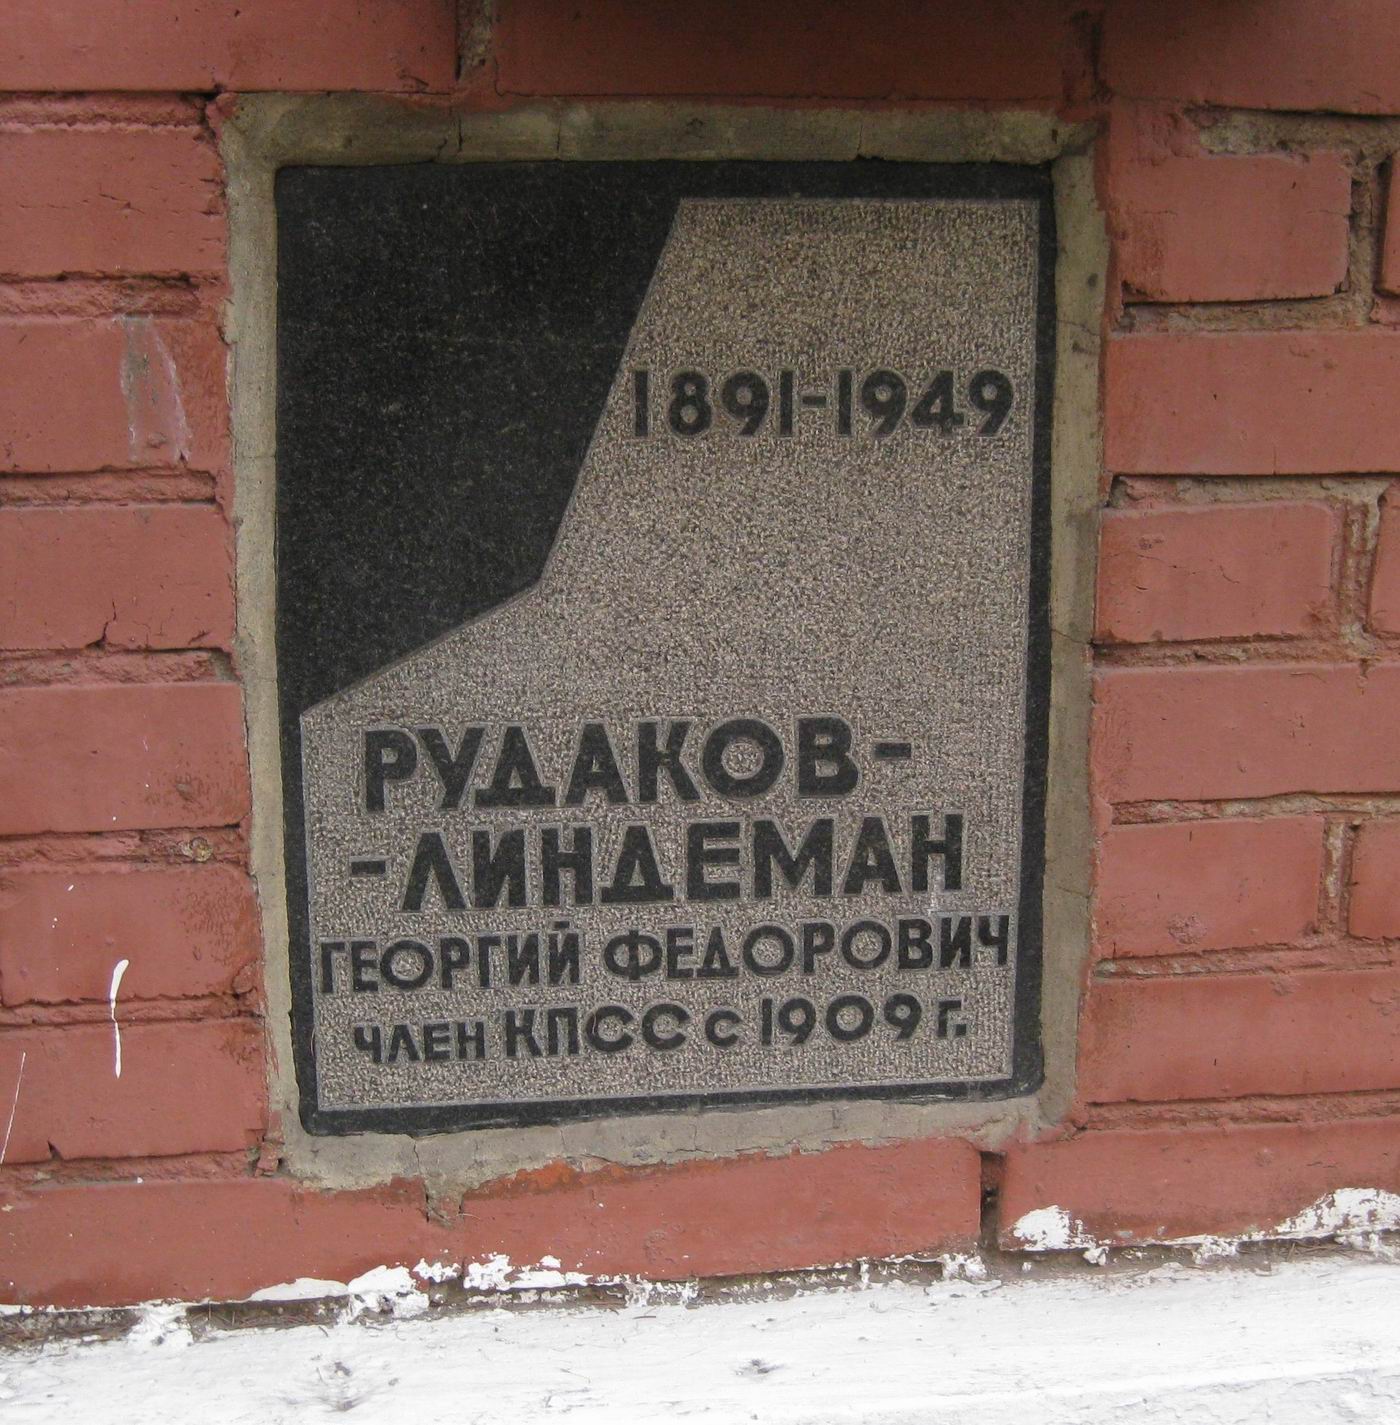 Плита на нише Рудакова-Линдемана Г.Ф. (1891-1949), на Новодевичьем кладбище (колумбарий [133]-15-4).